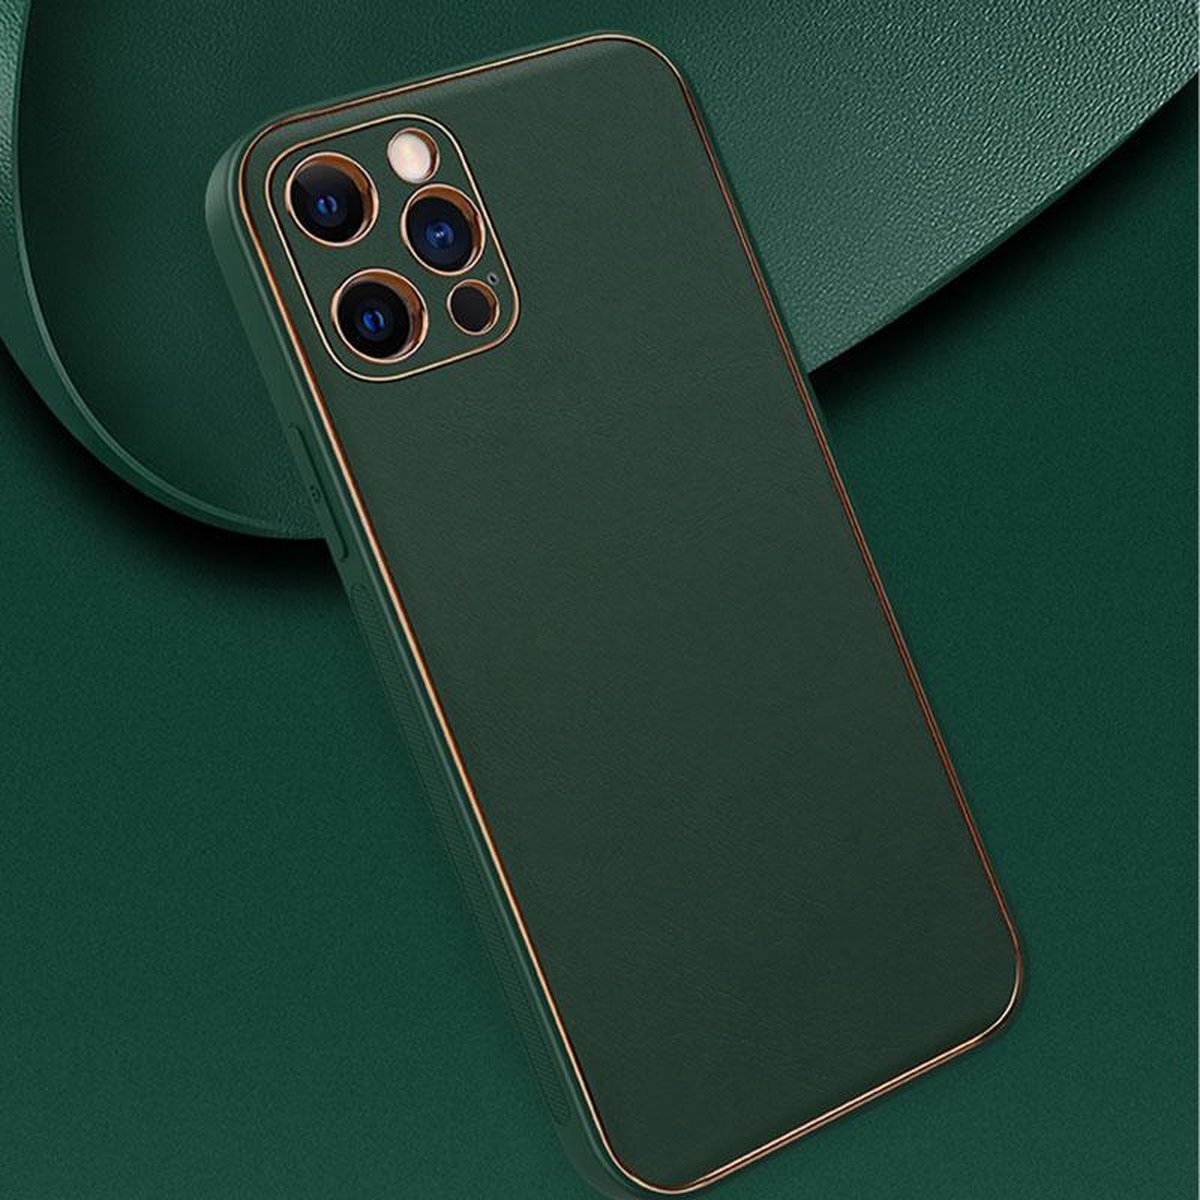 JPM Iphone 12 Pro Max Green Kunlst Leather Case